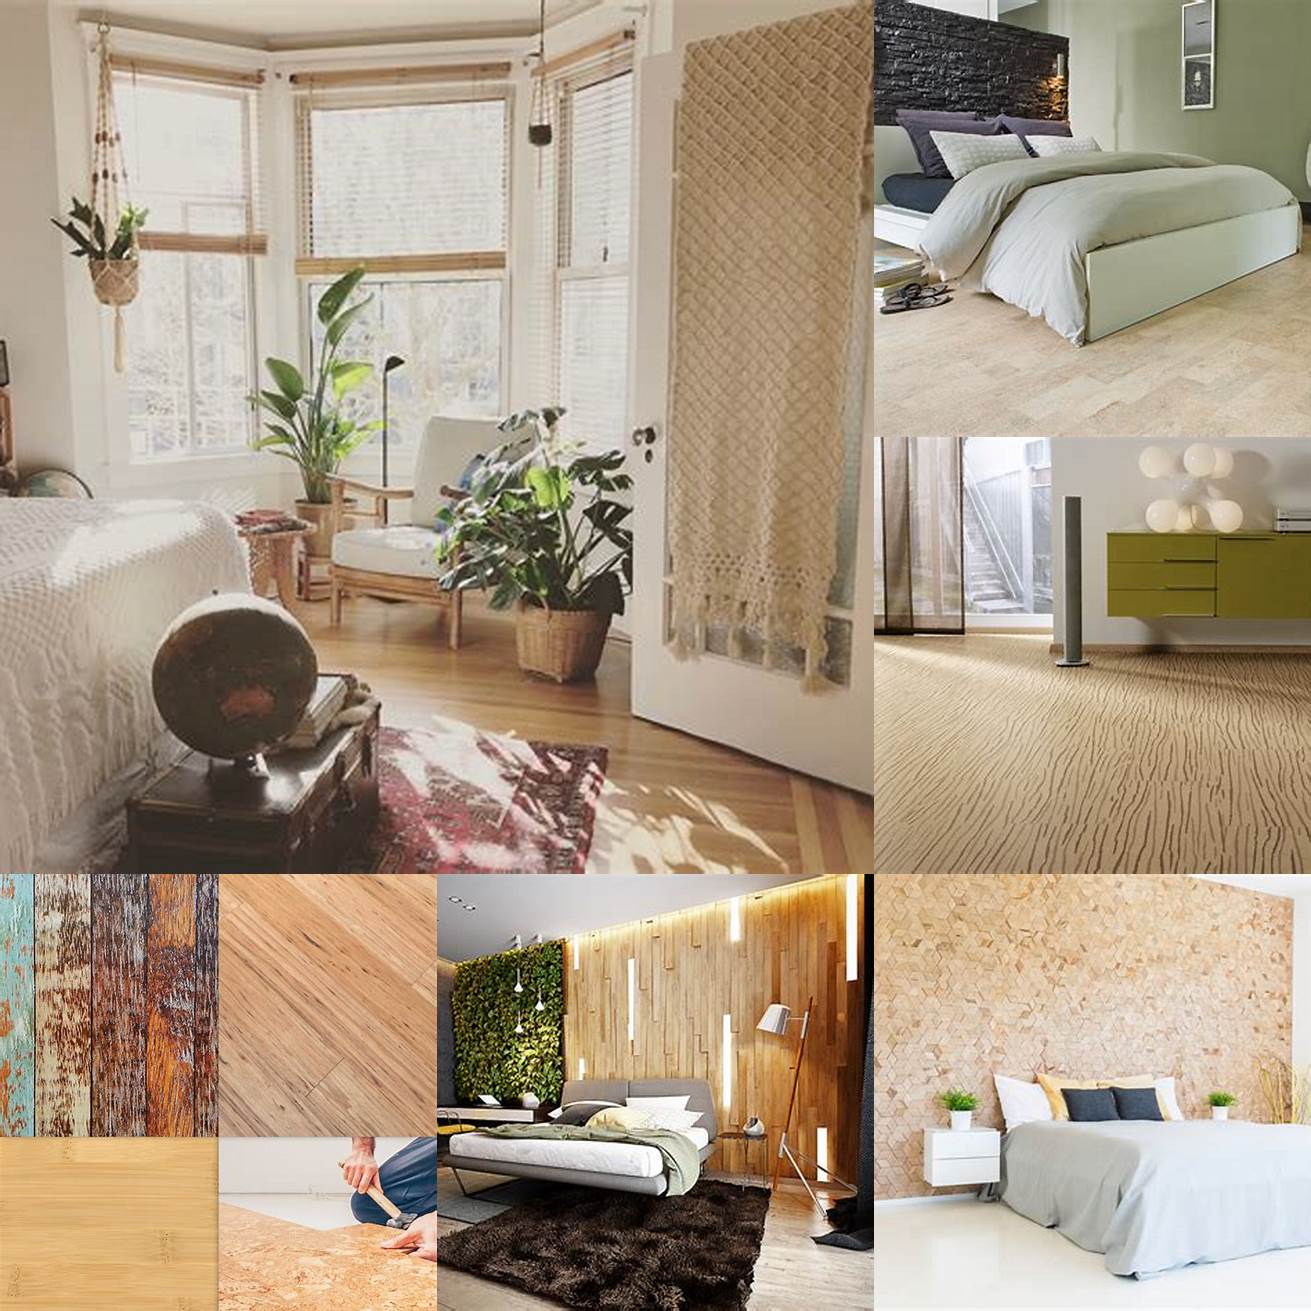 Cork flooring in an eco-friendly bedroom